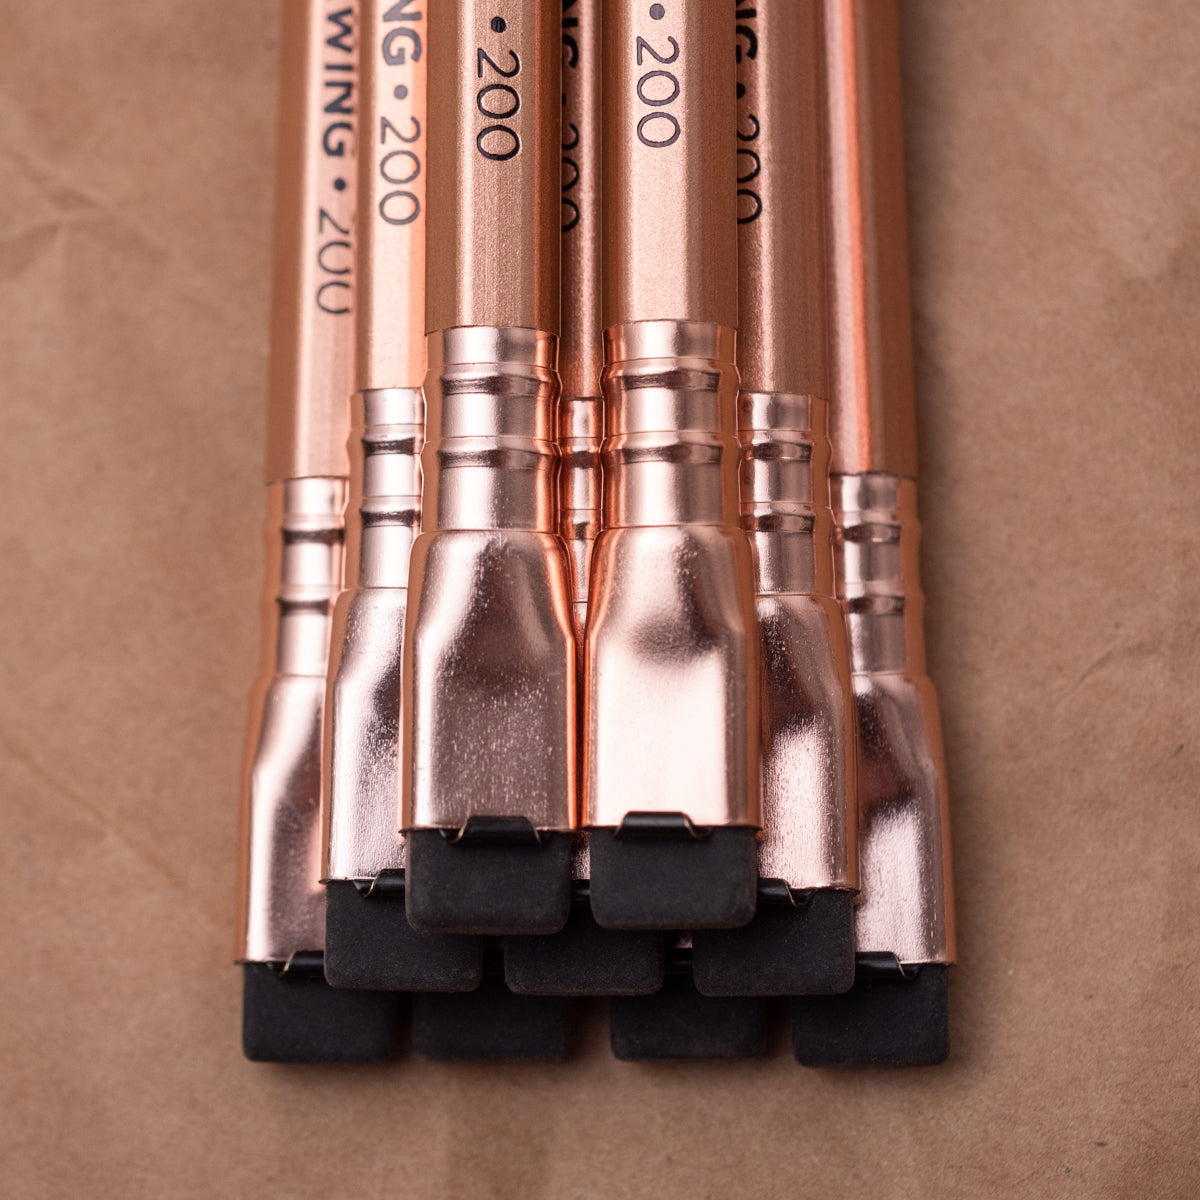 Blackwing Volume 200 Pencils (Set of 12)